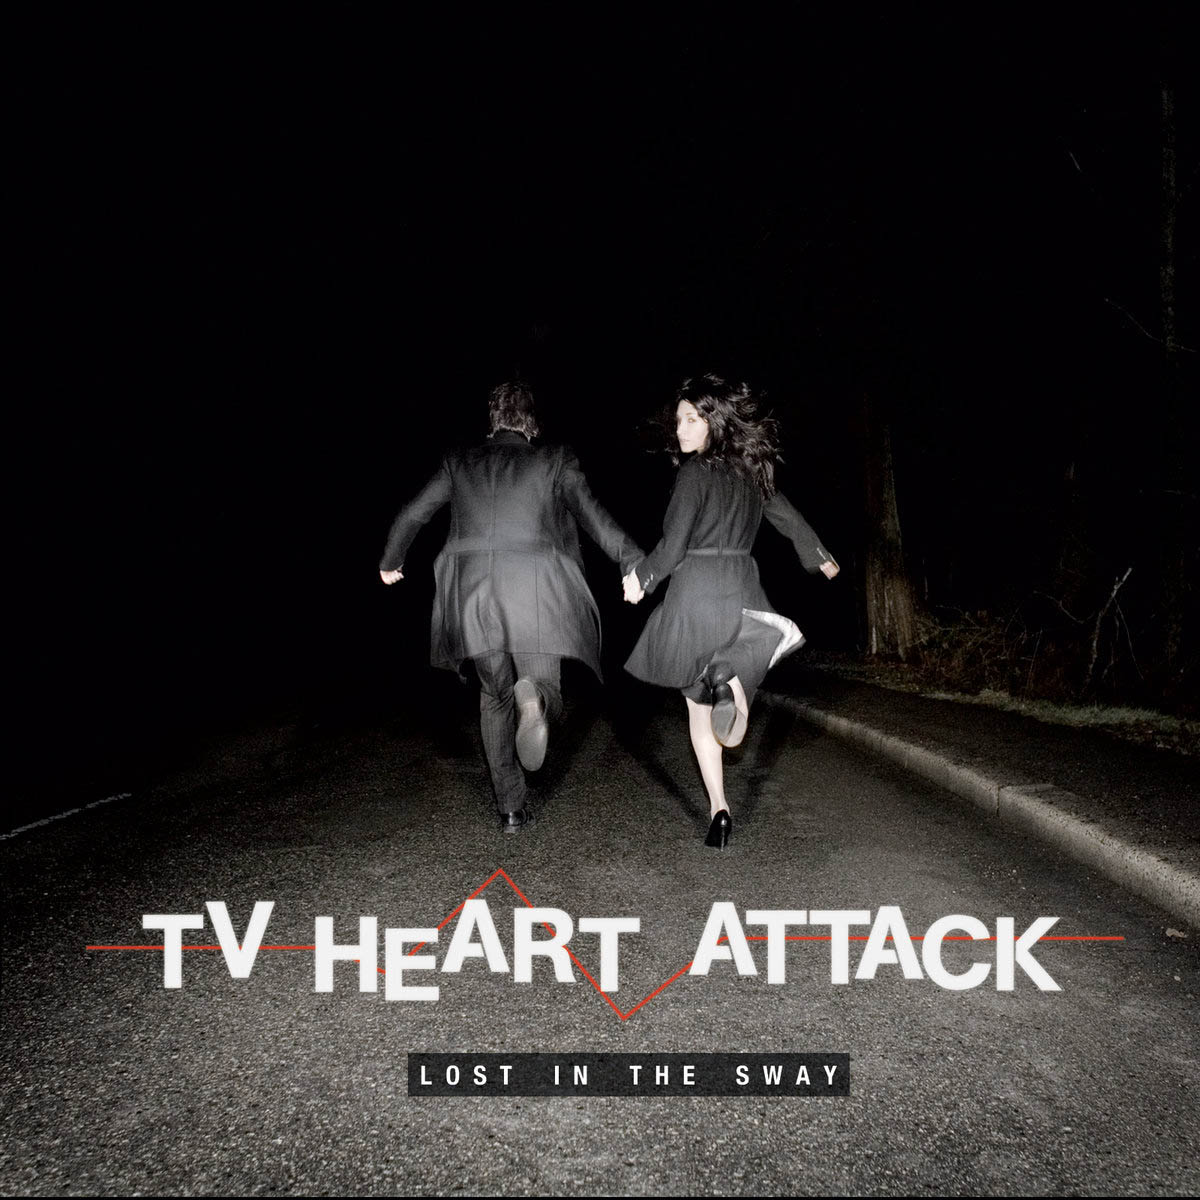 Песня нападение. Песня Heart Attack. Хеарт Аттак песня текст. ТВ Hearts. Heart Attack перевод песни.